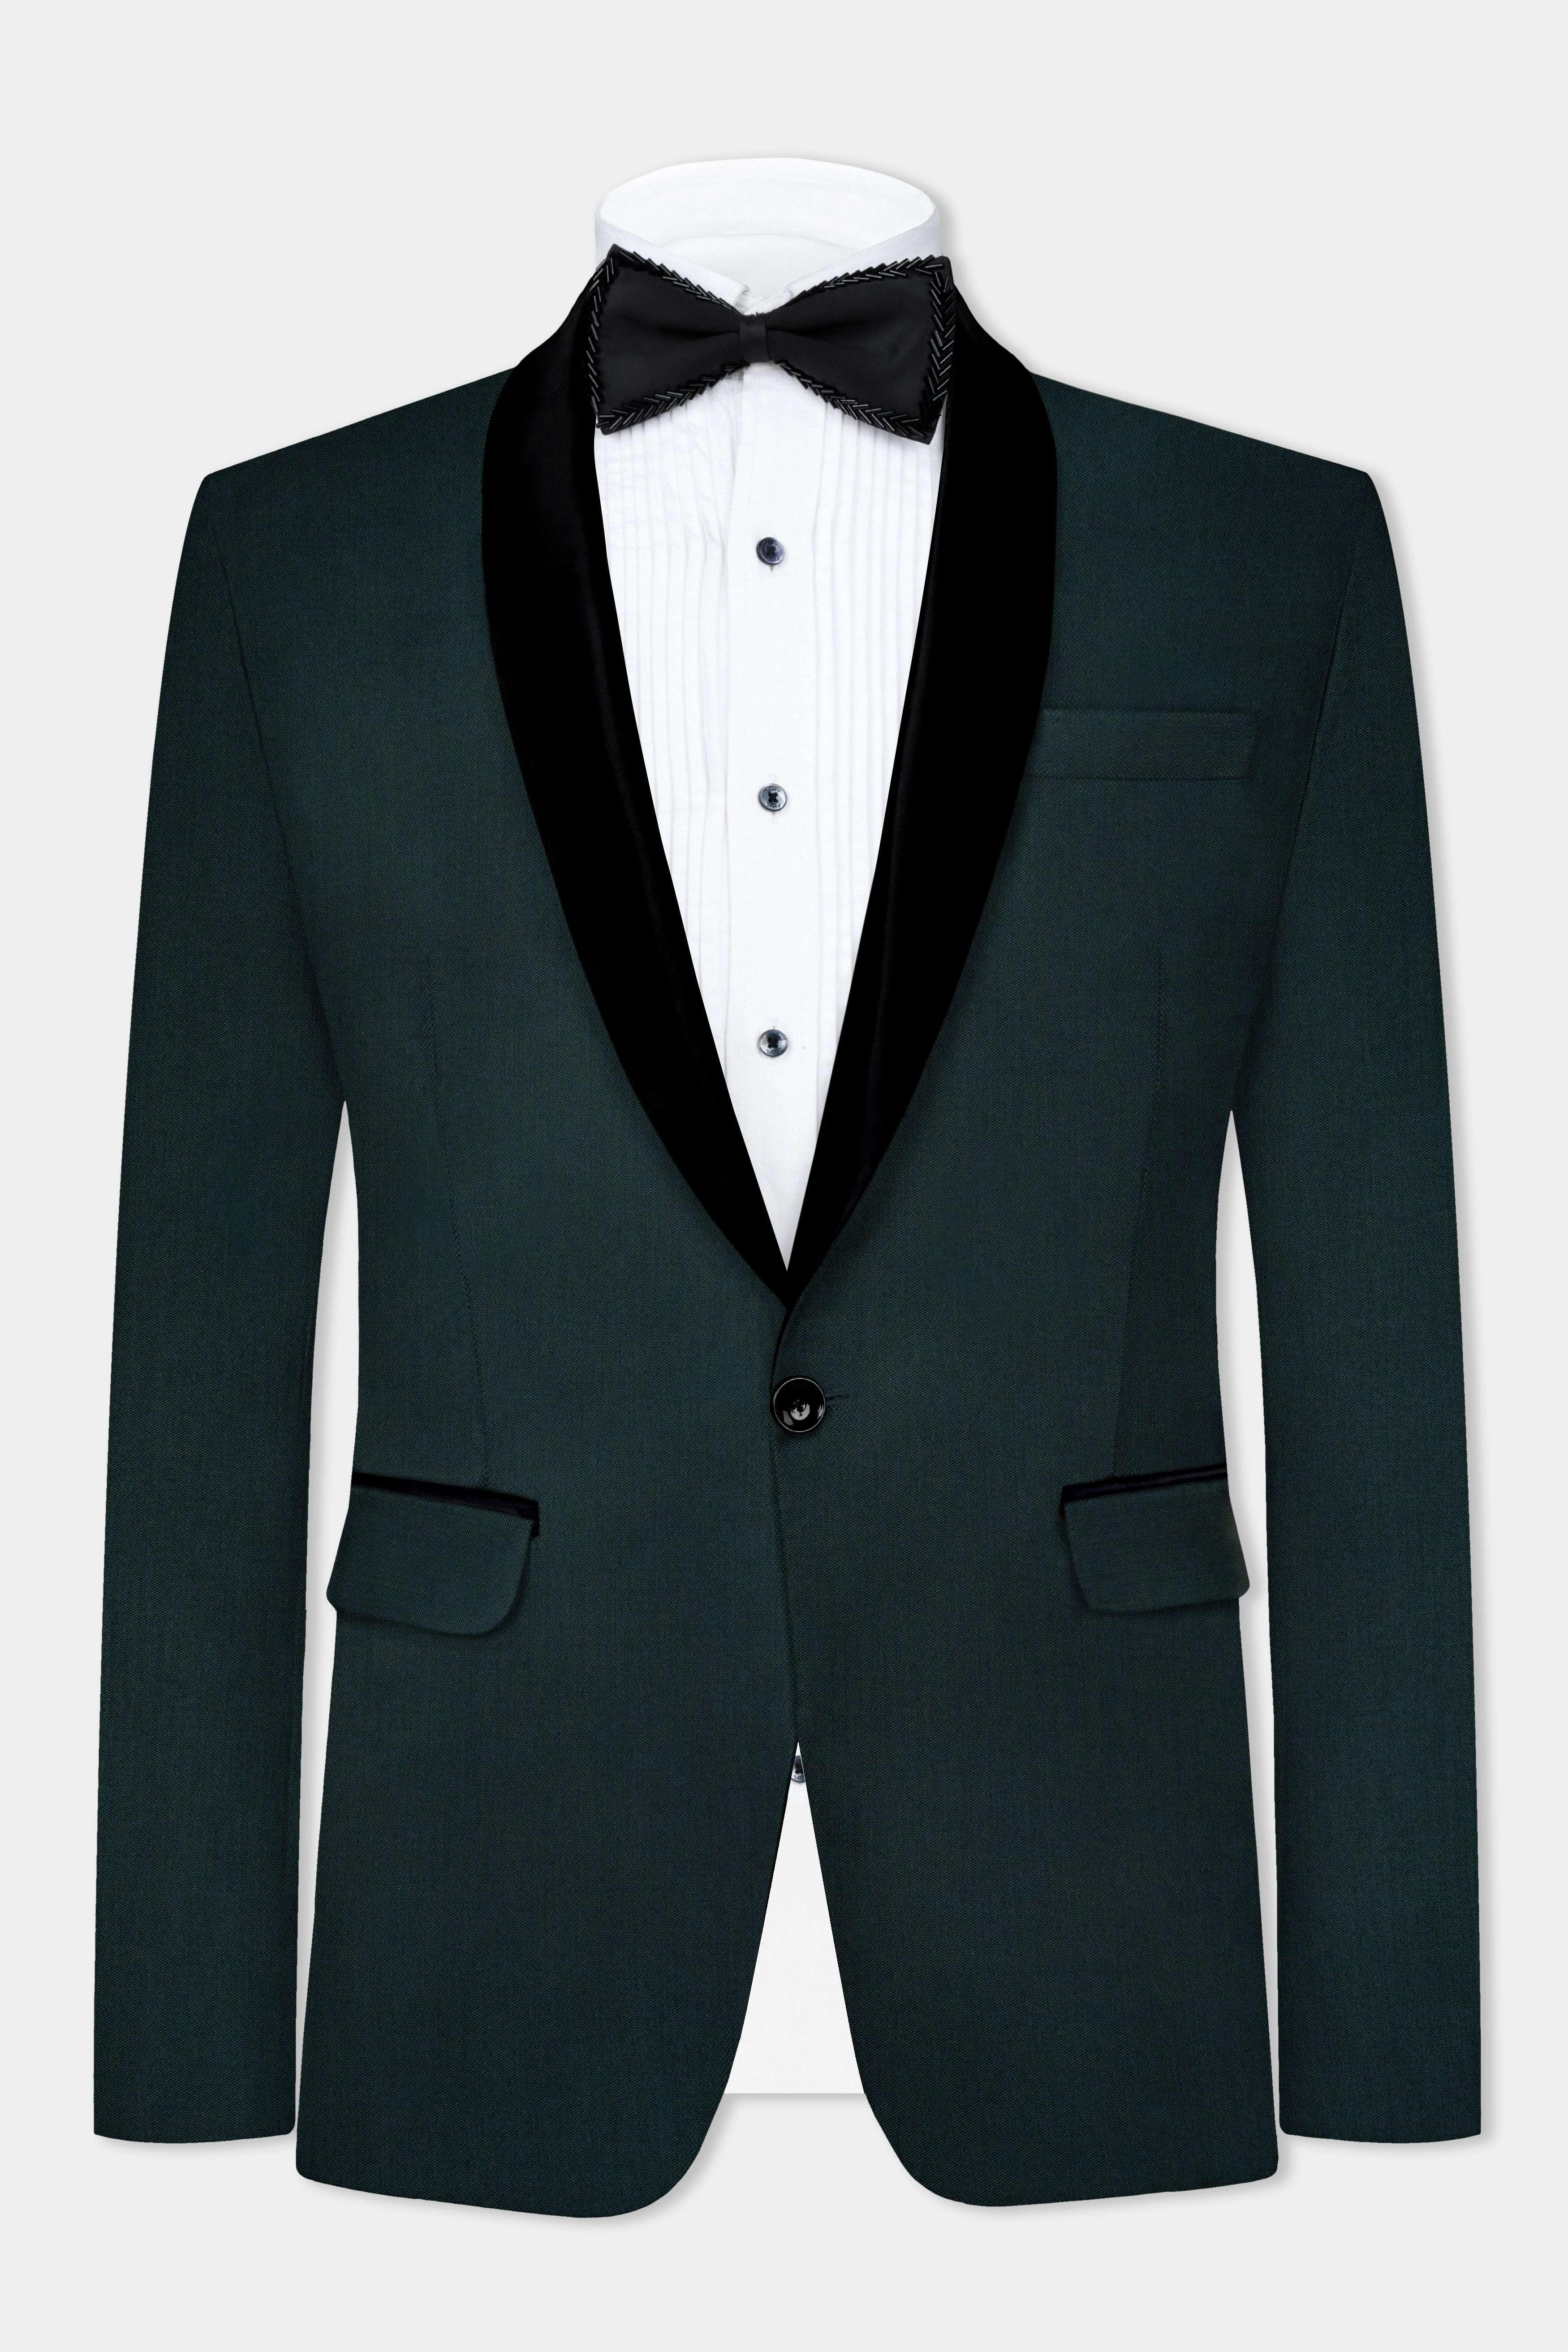 Timber Green Wool Rich Tuxedo Suit